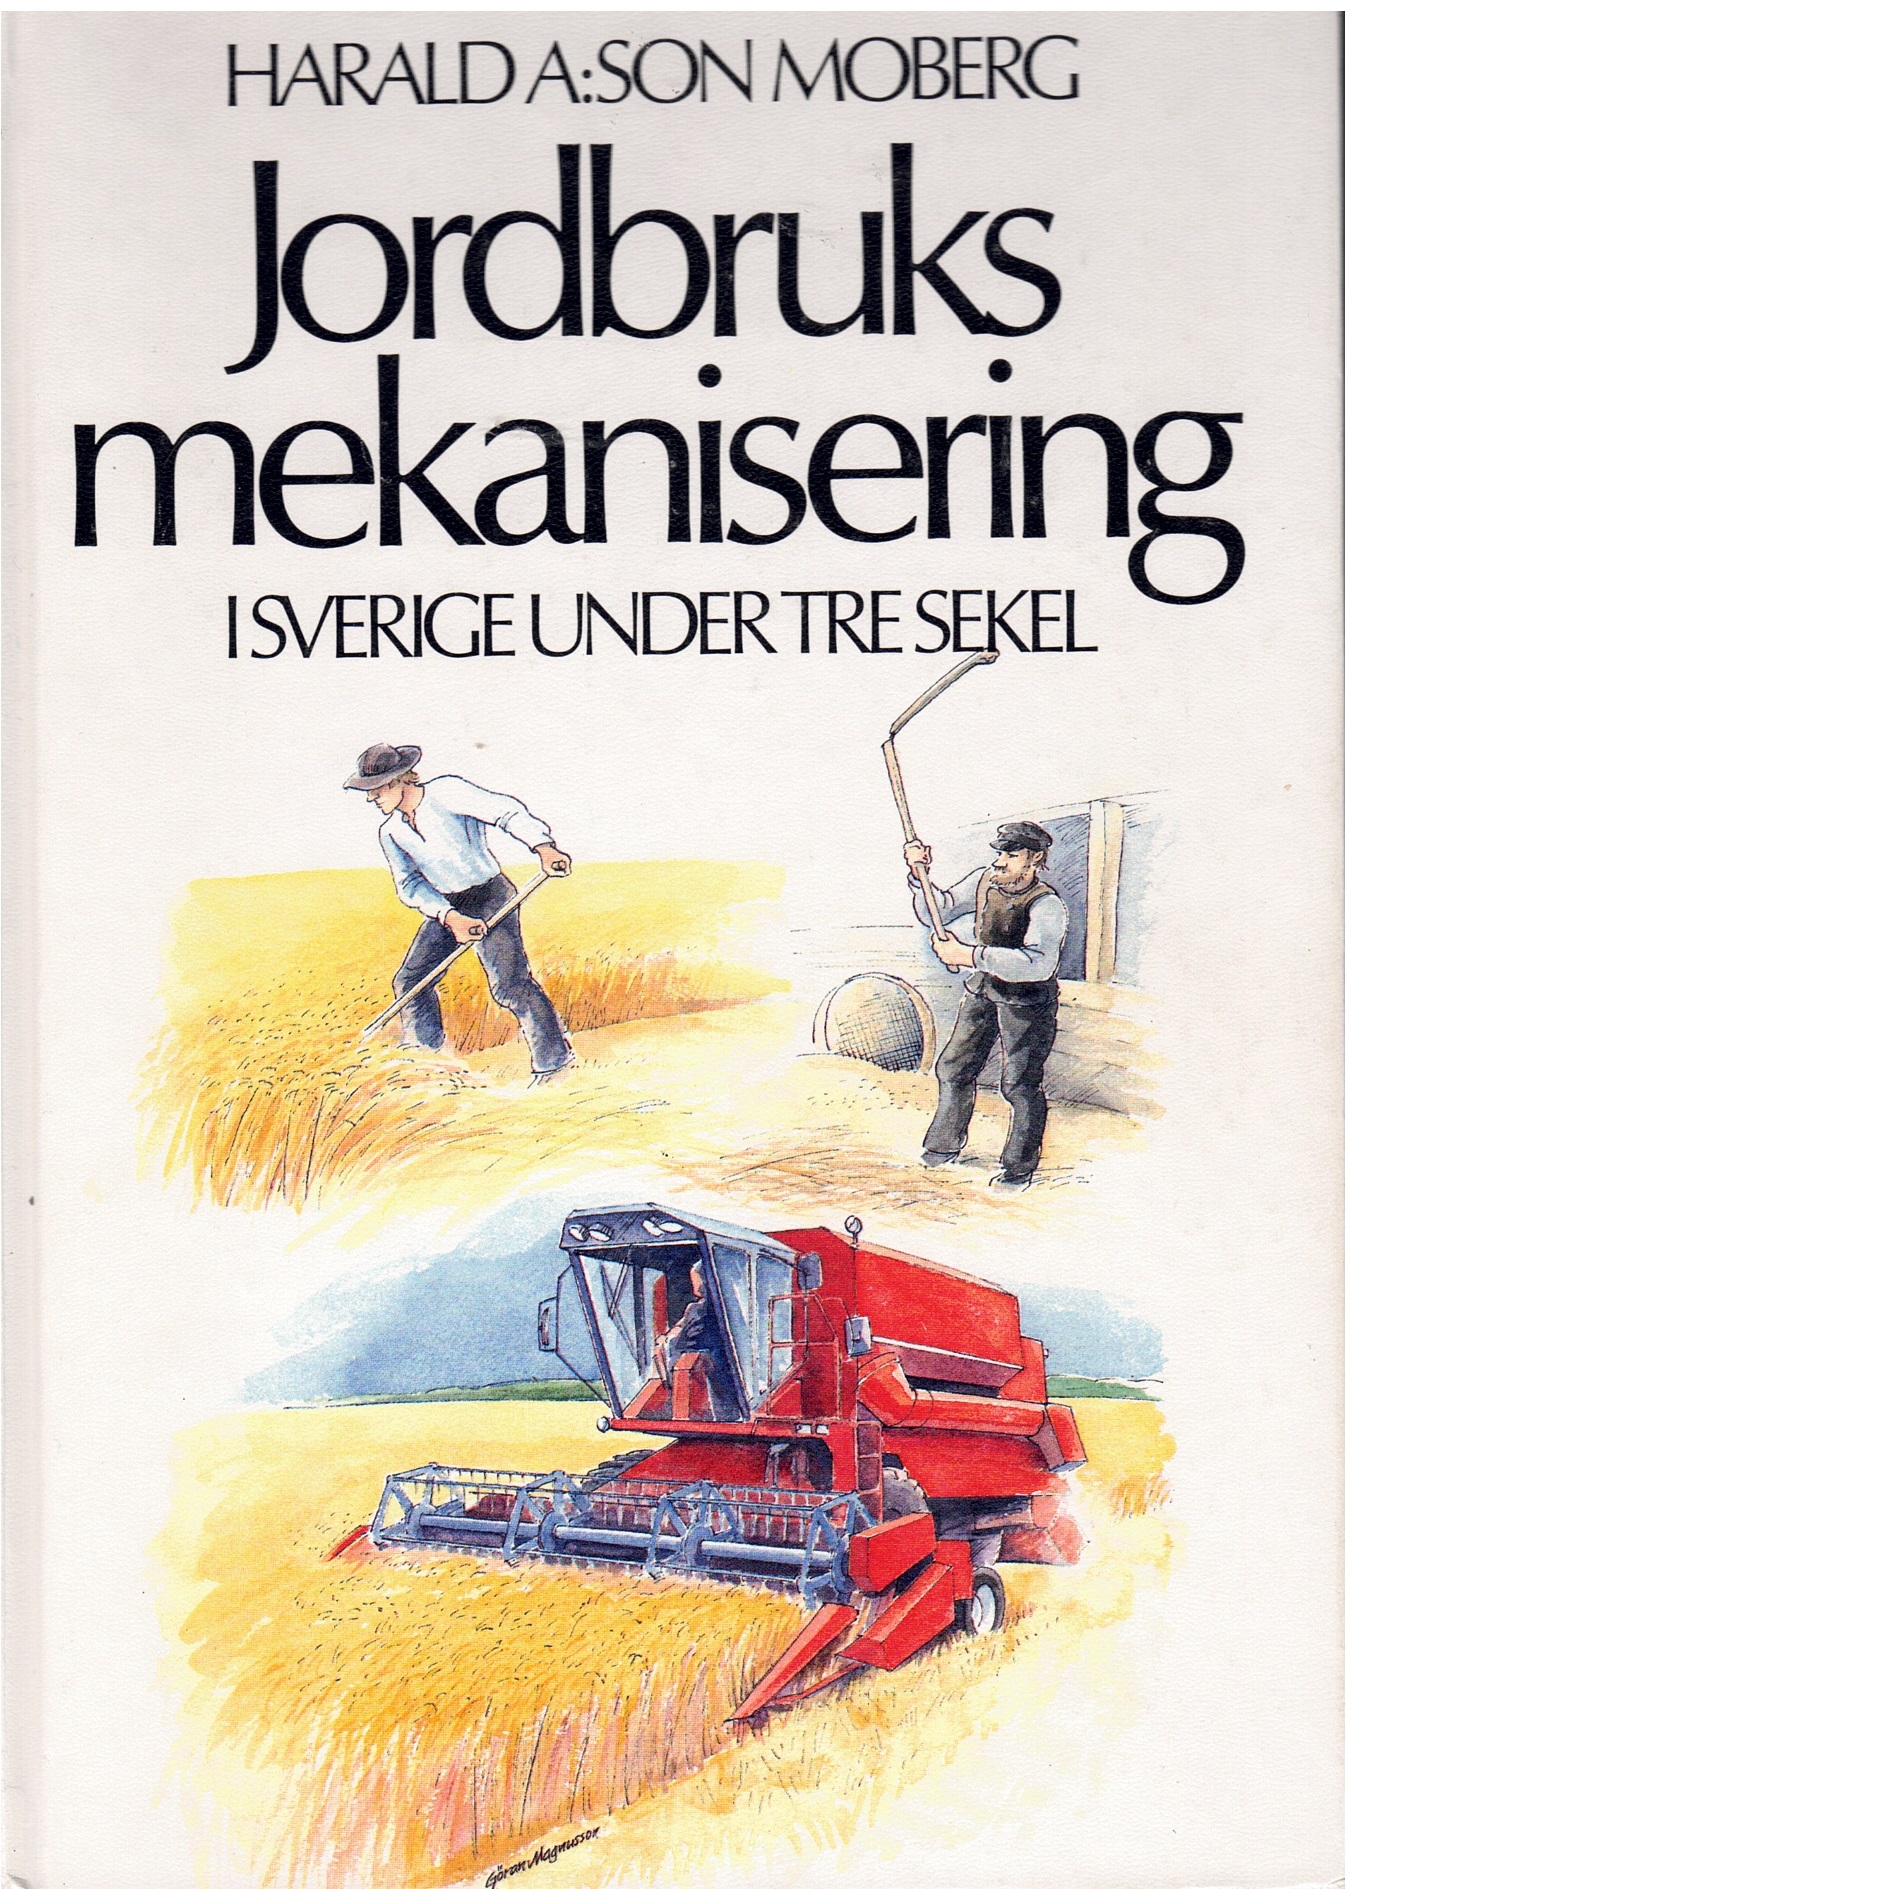 Jordbruksmekanisering i Sverige under tre sekel - Moberg, Harald A:son